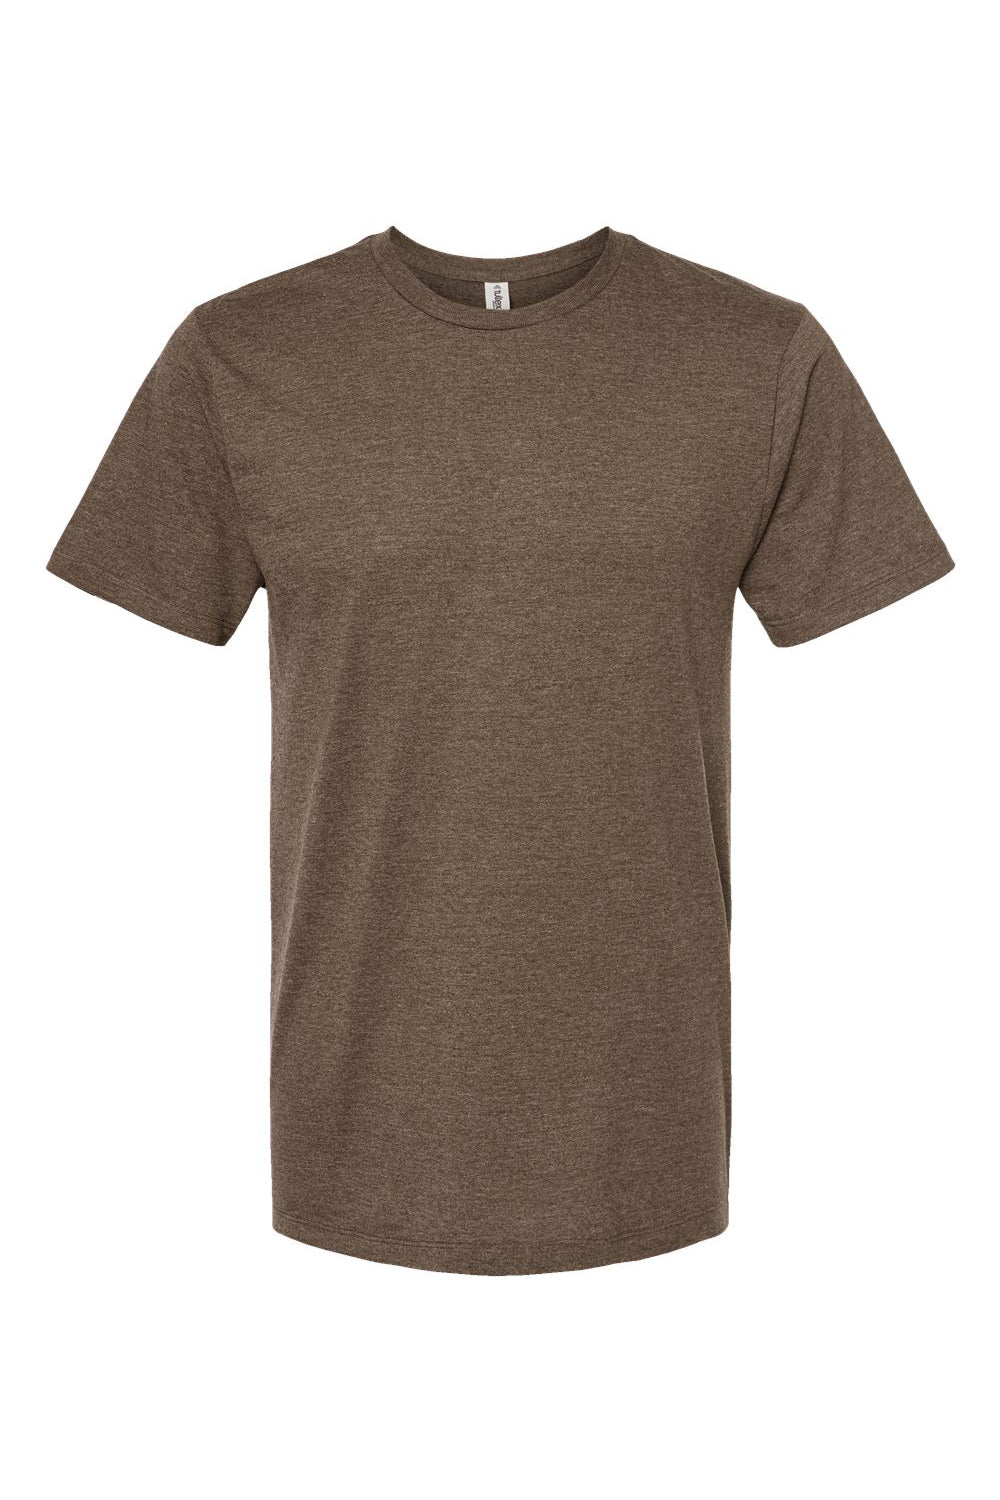 Tultex 541 Mens Premium Short Sleeve Crewneck T-Shirt Heather Brown Flat Front